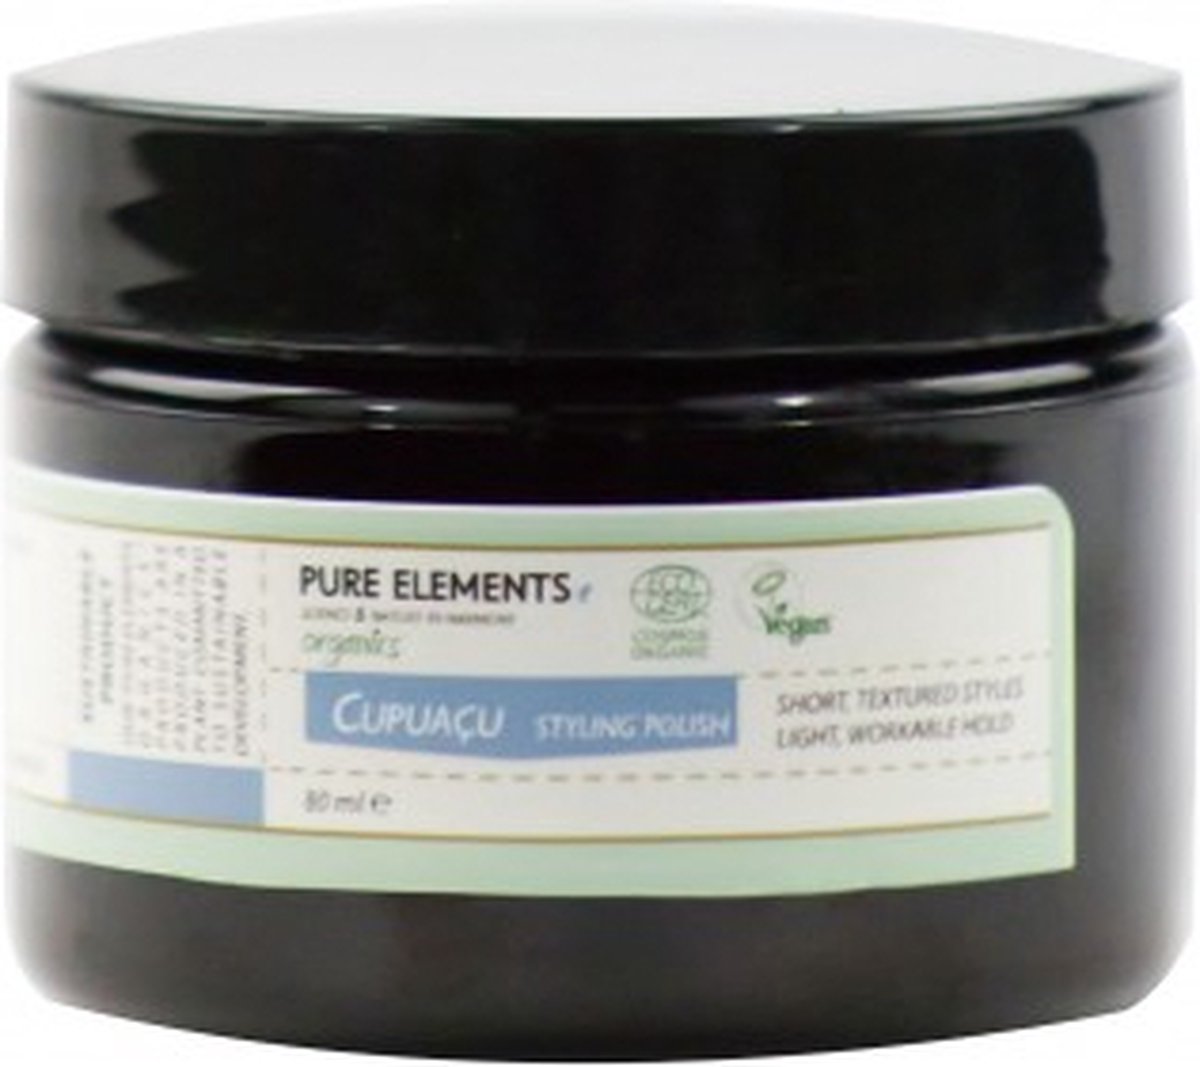 Pure Elements Cupuacu Styling Polish Certified Organic 80ml | Natuurlijke haarwax